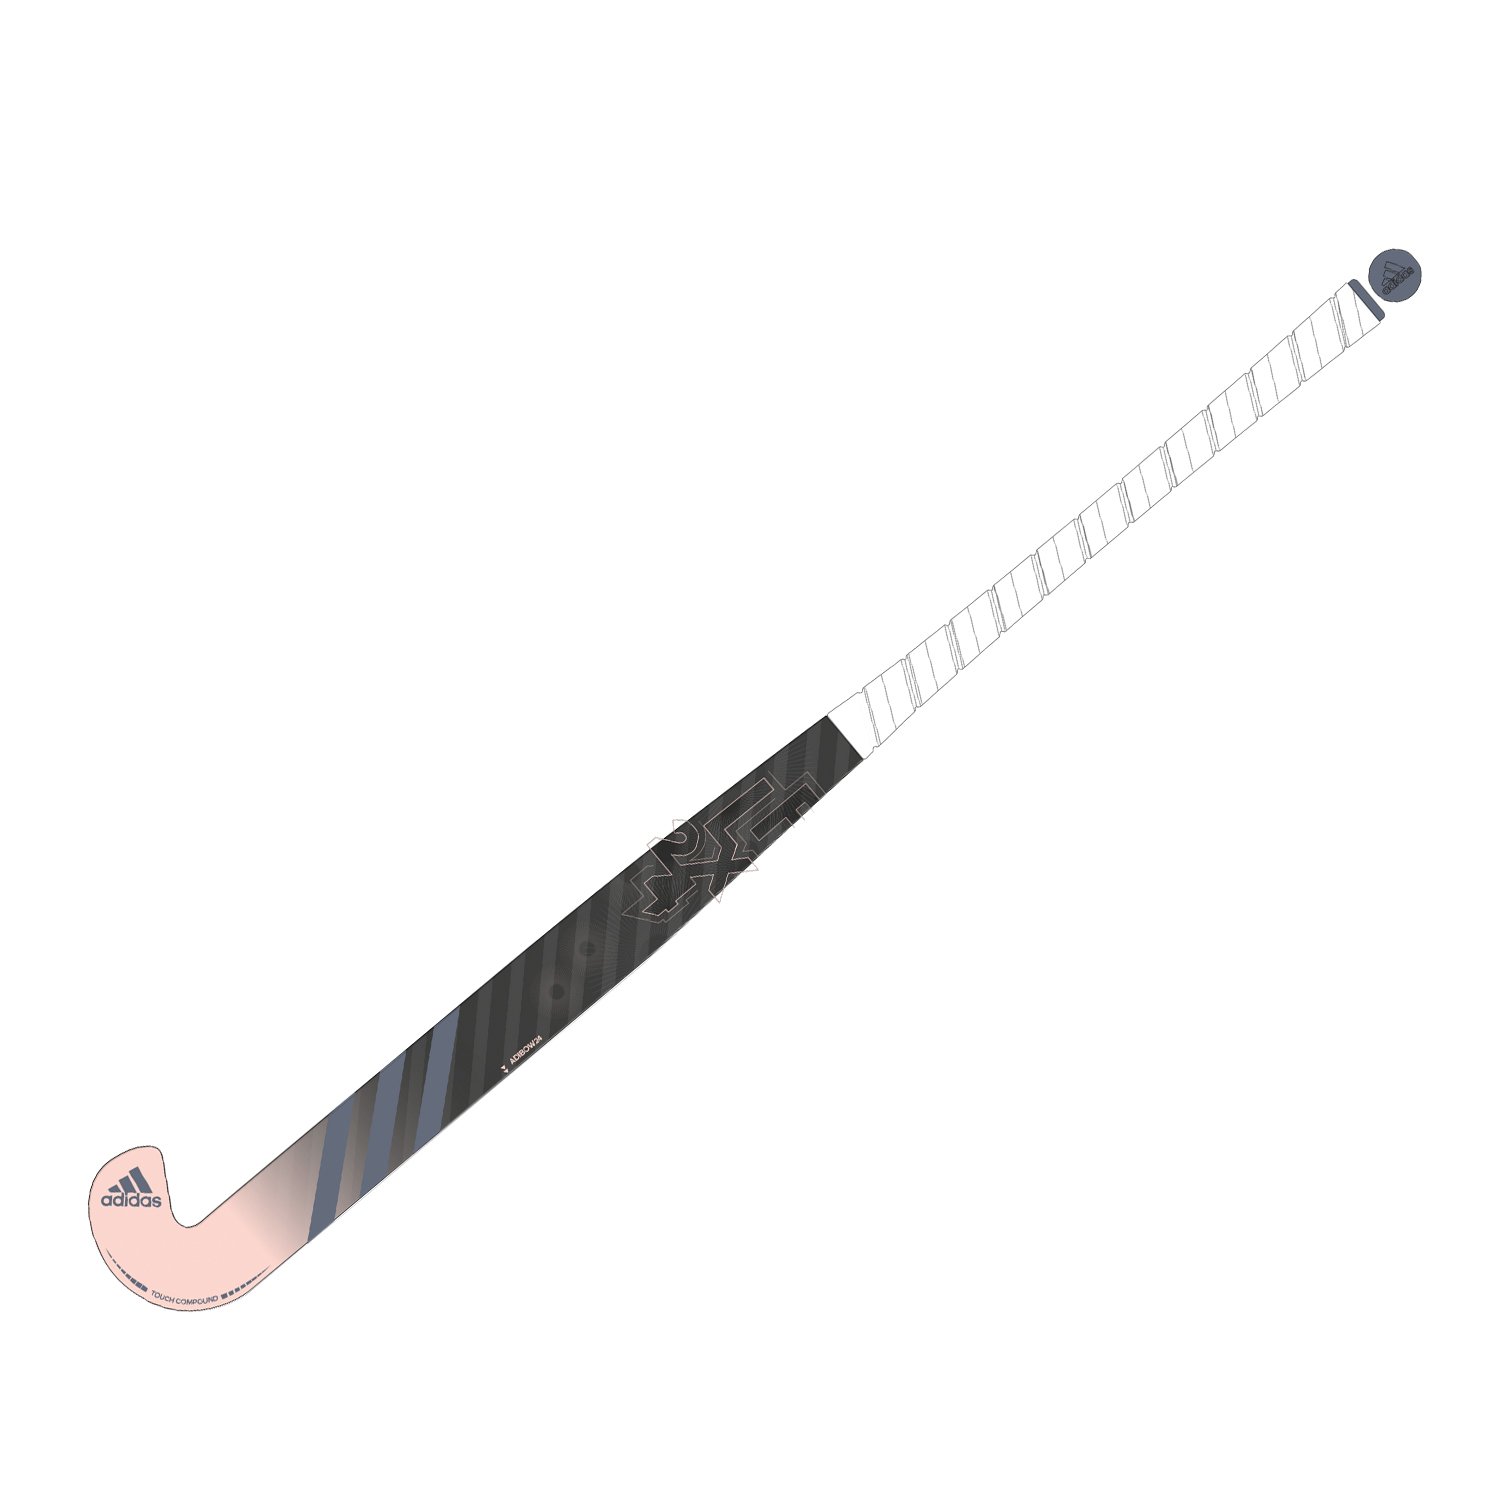 flx24 carbon hockey stick